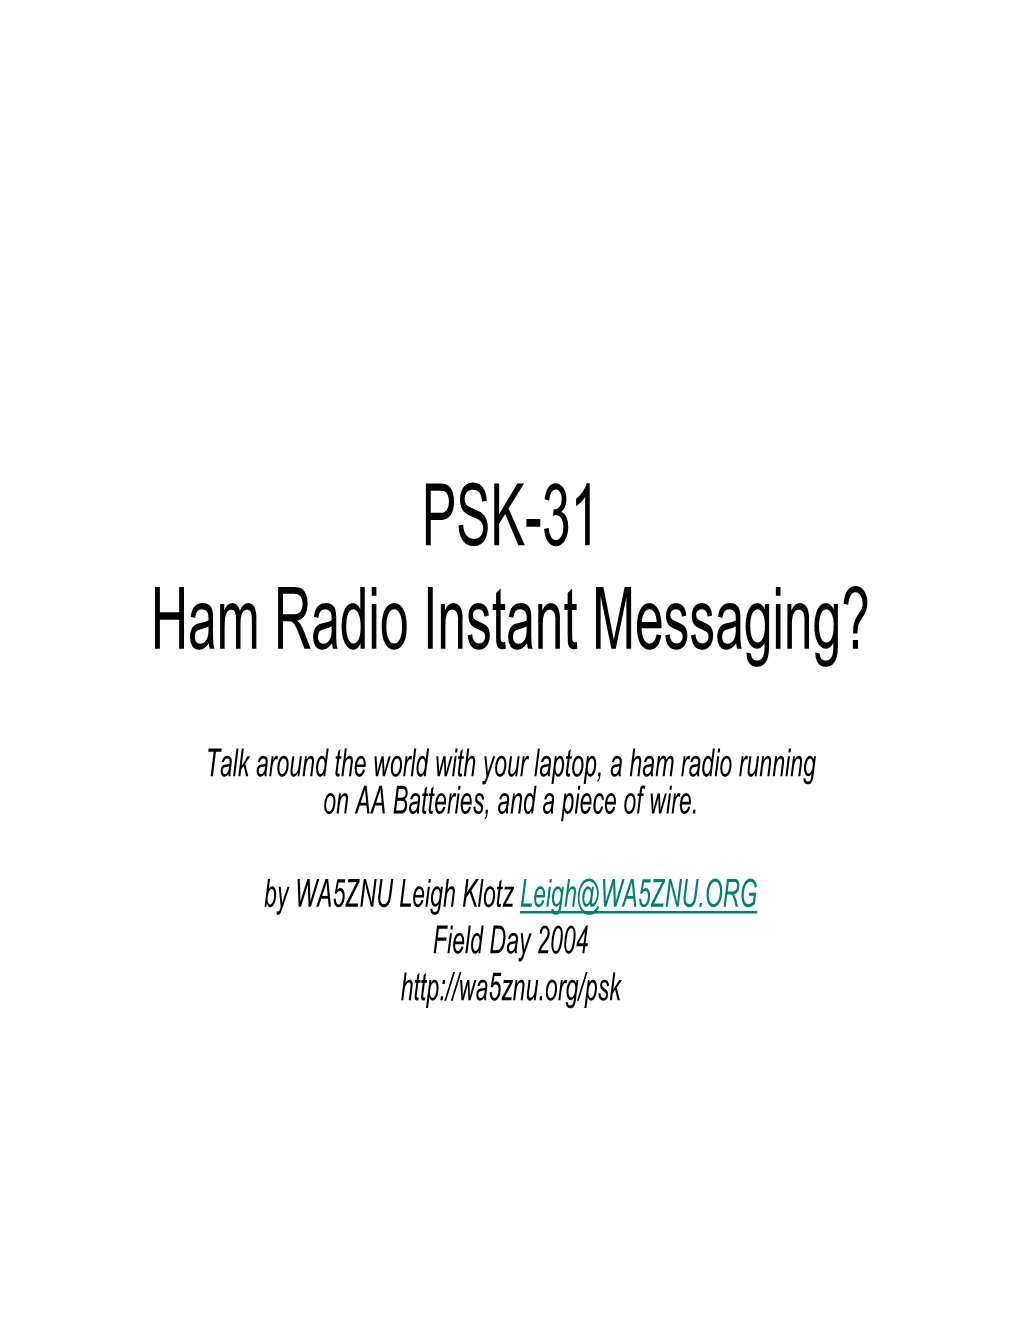 PSK-31 Ham Radio Instant Messaging?